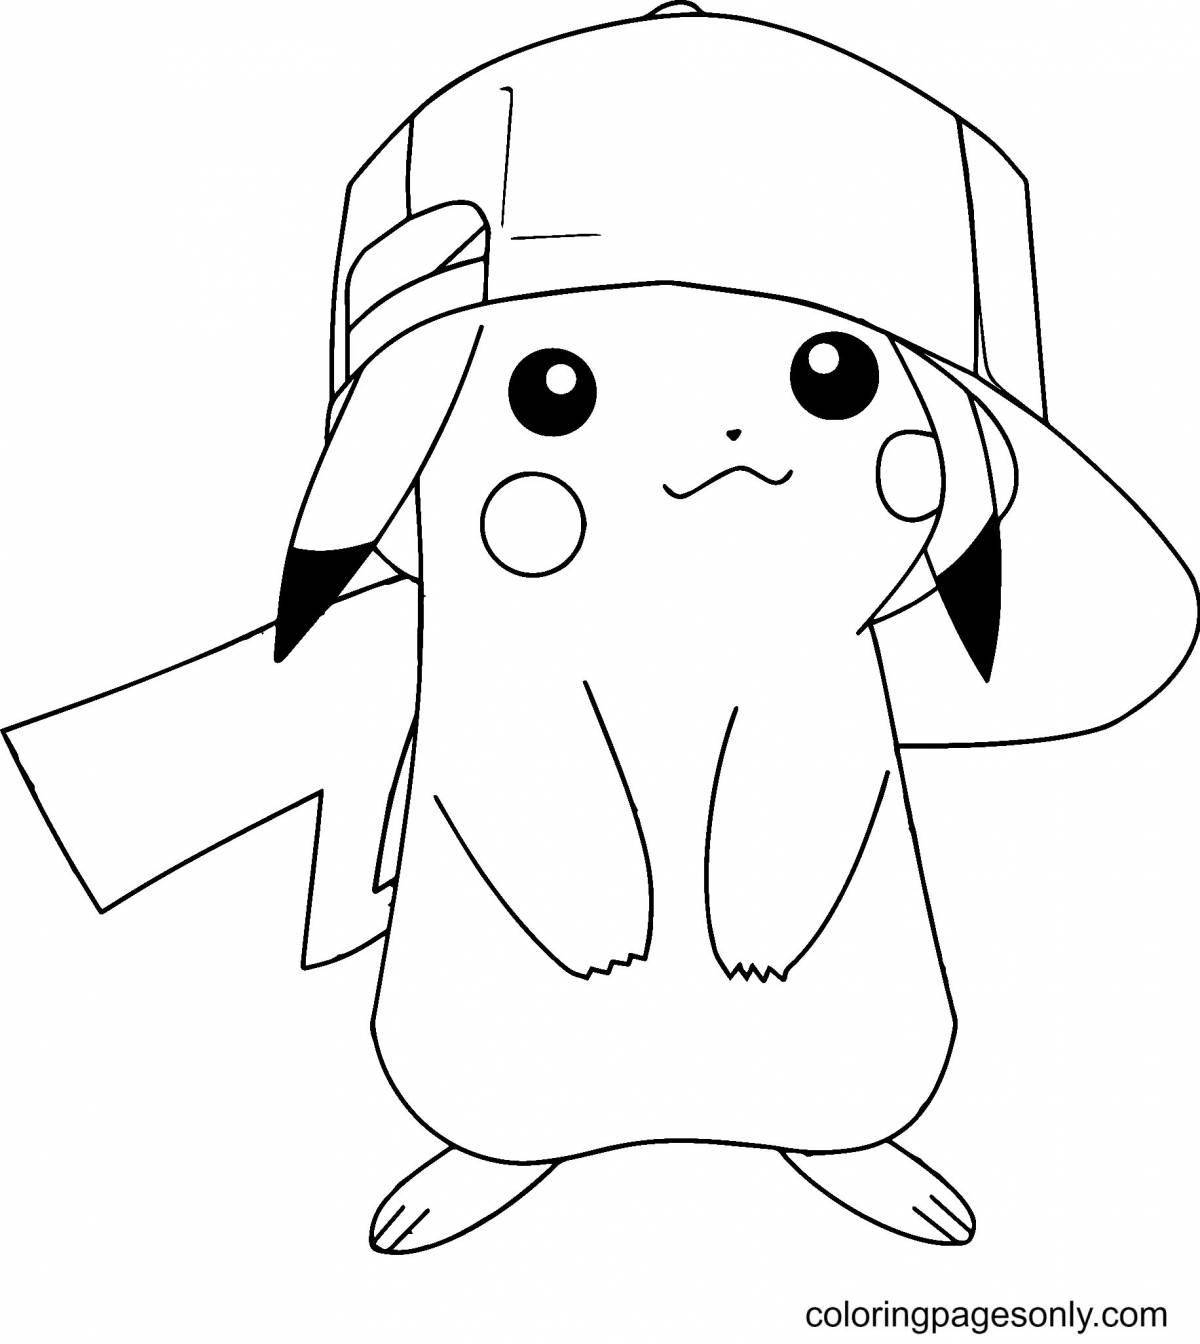 Fun pikachu coloring page